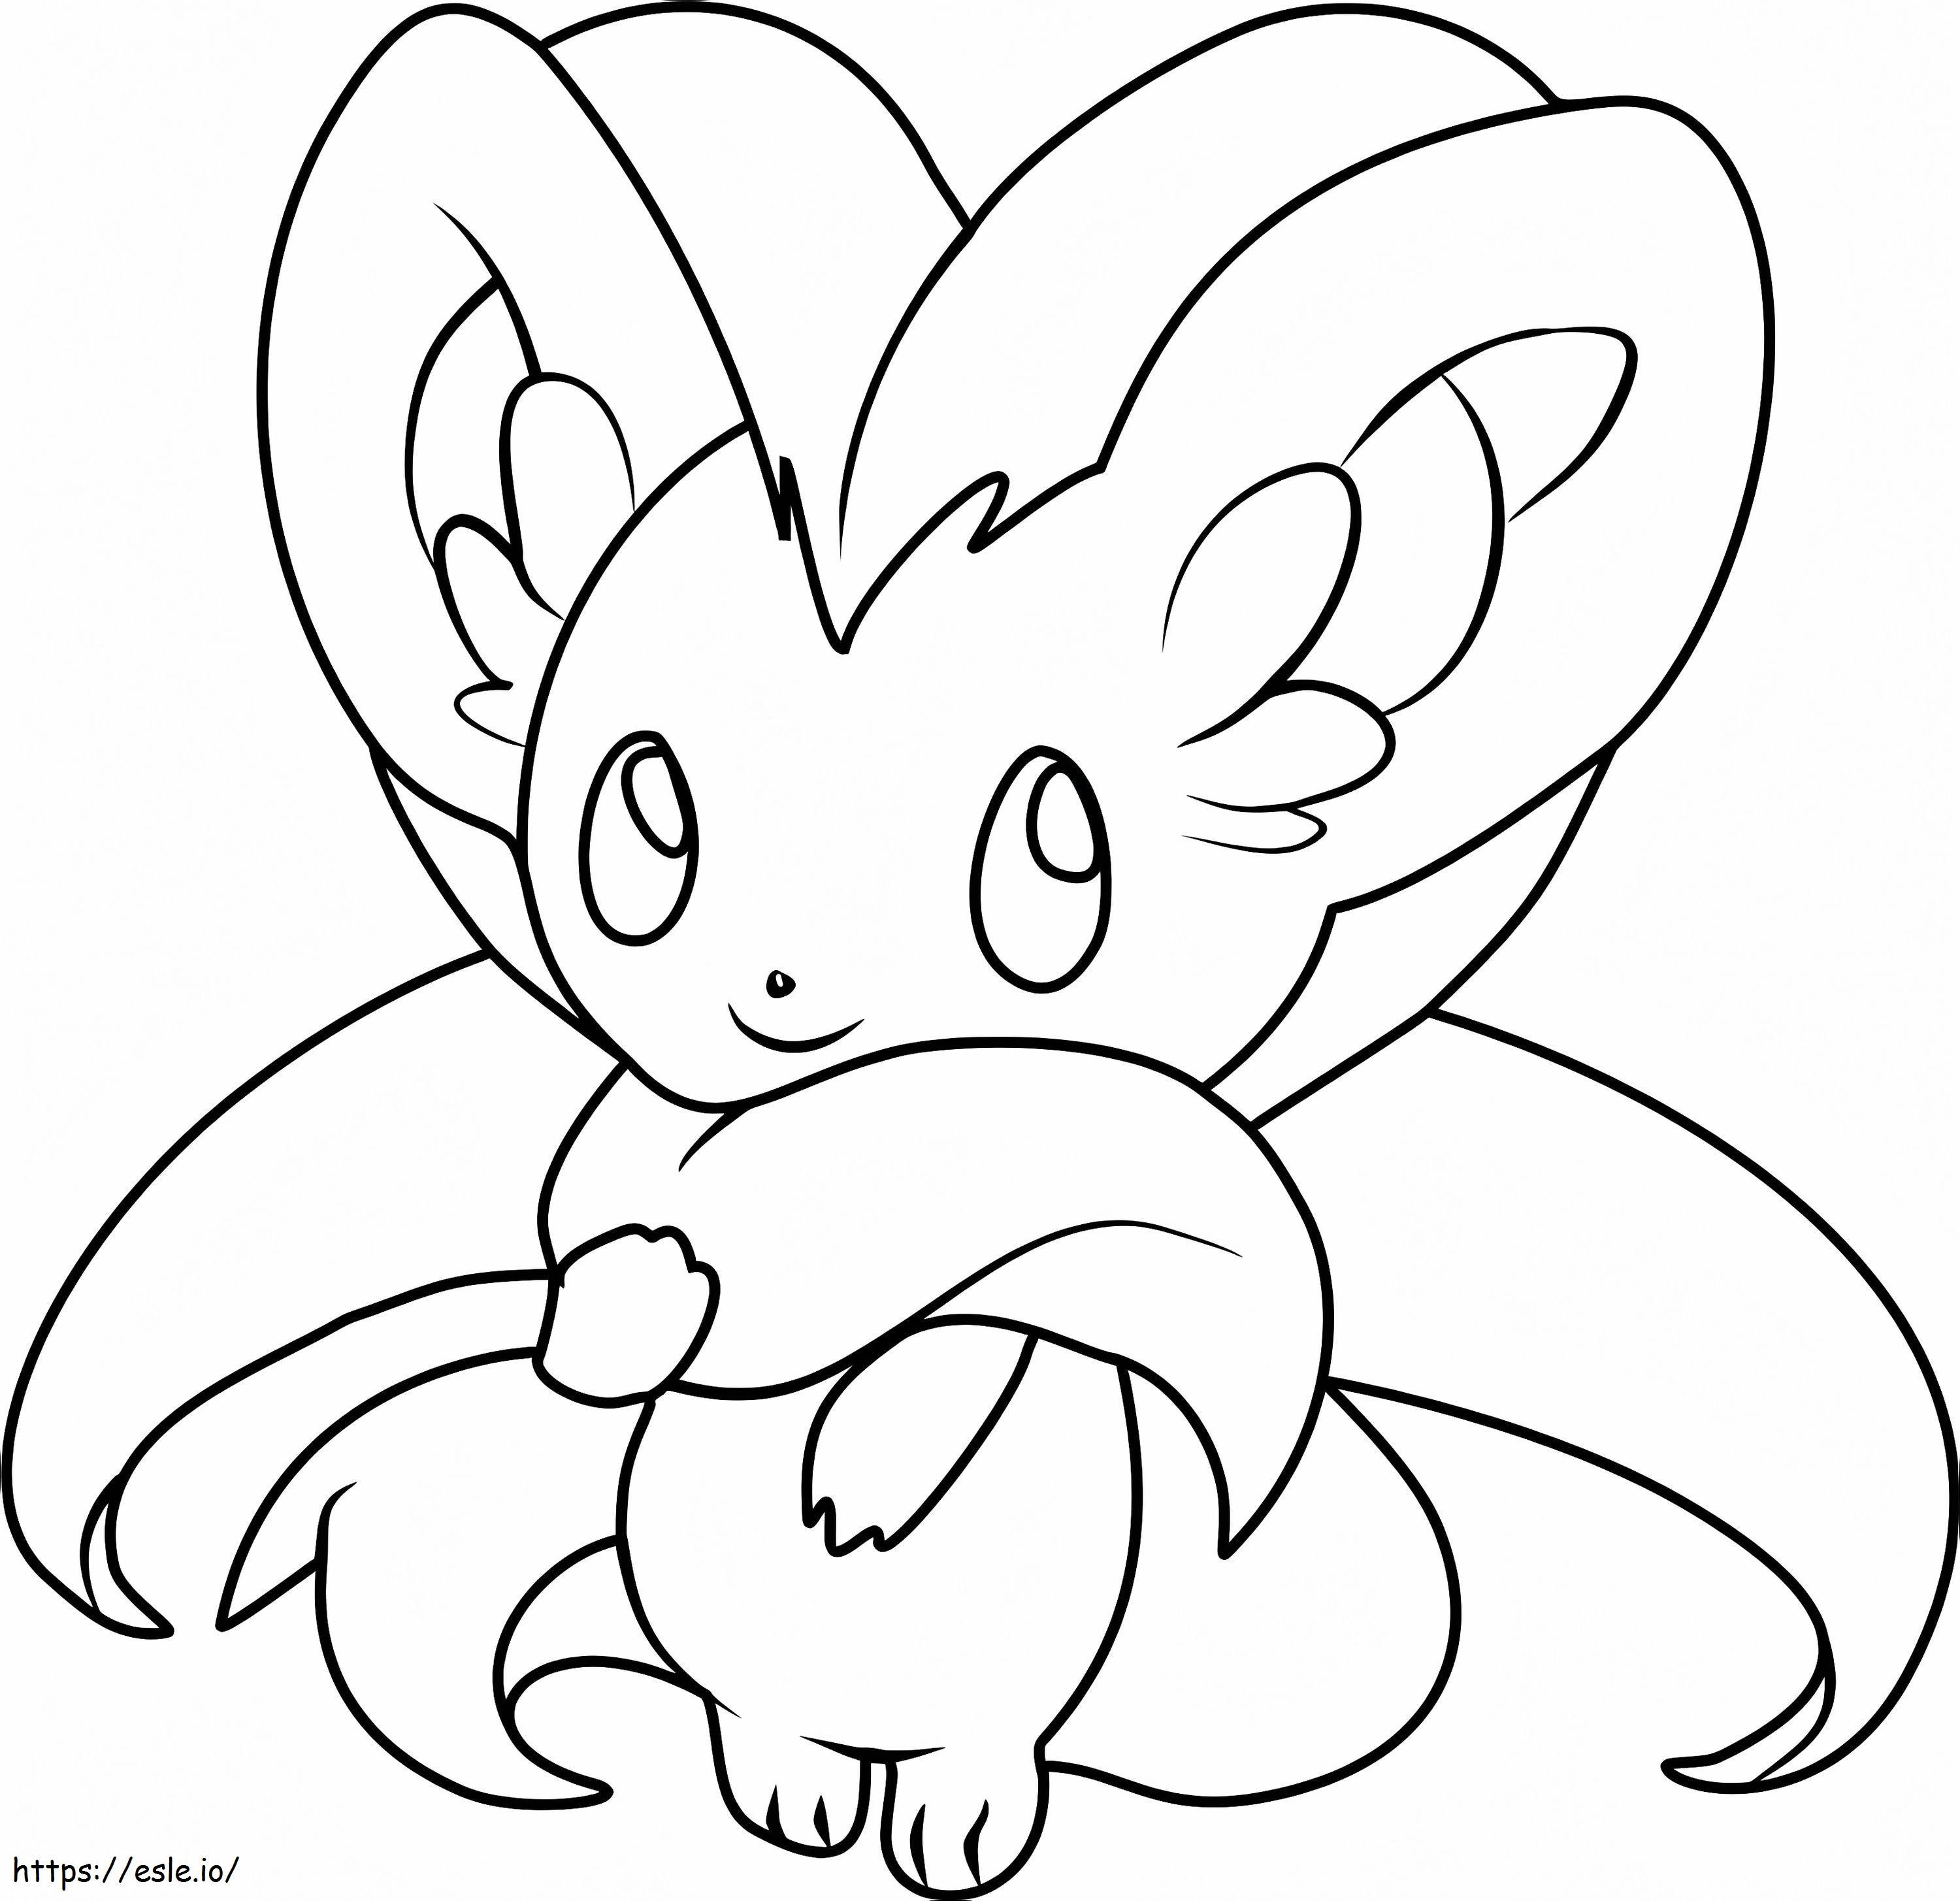 Coloriage Pokemon Cinccino à imprimer dessin